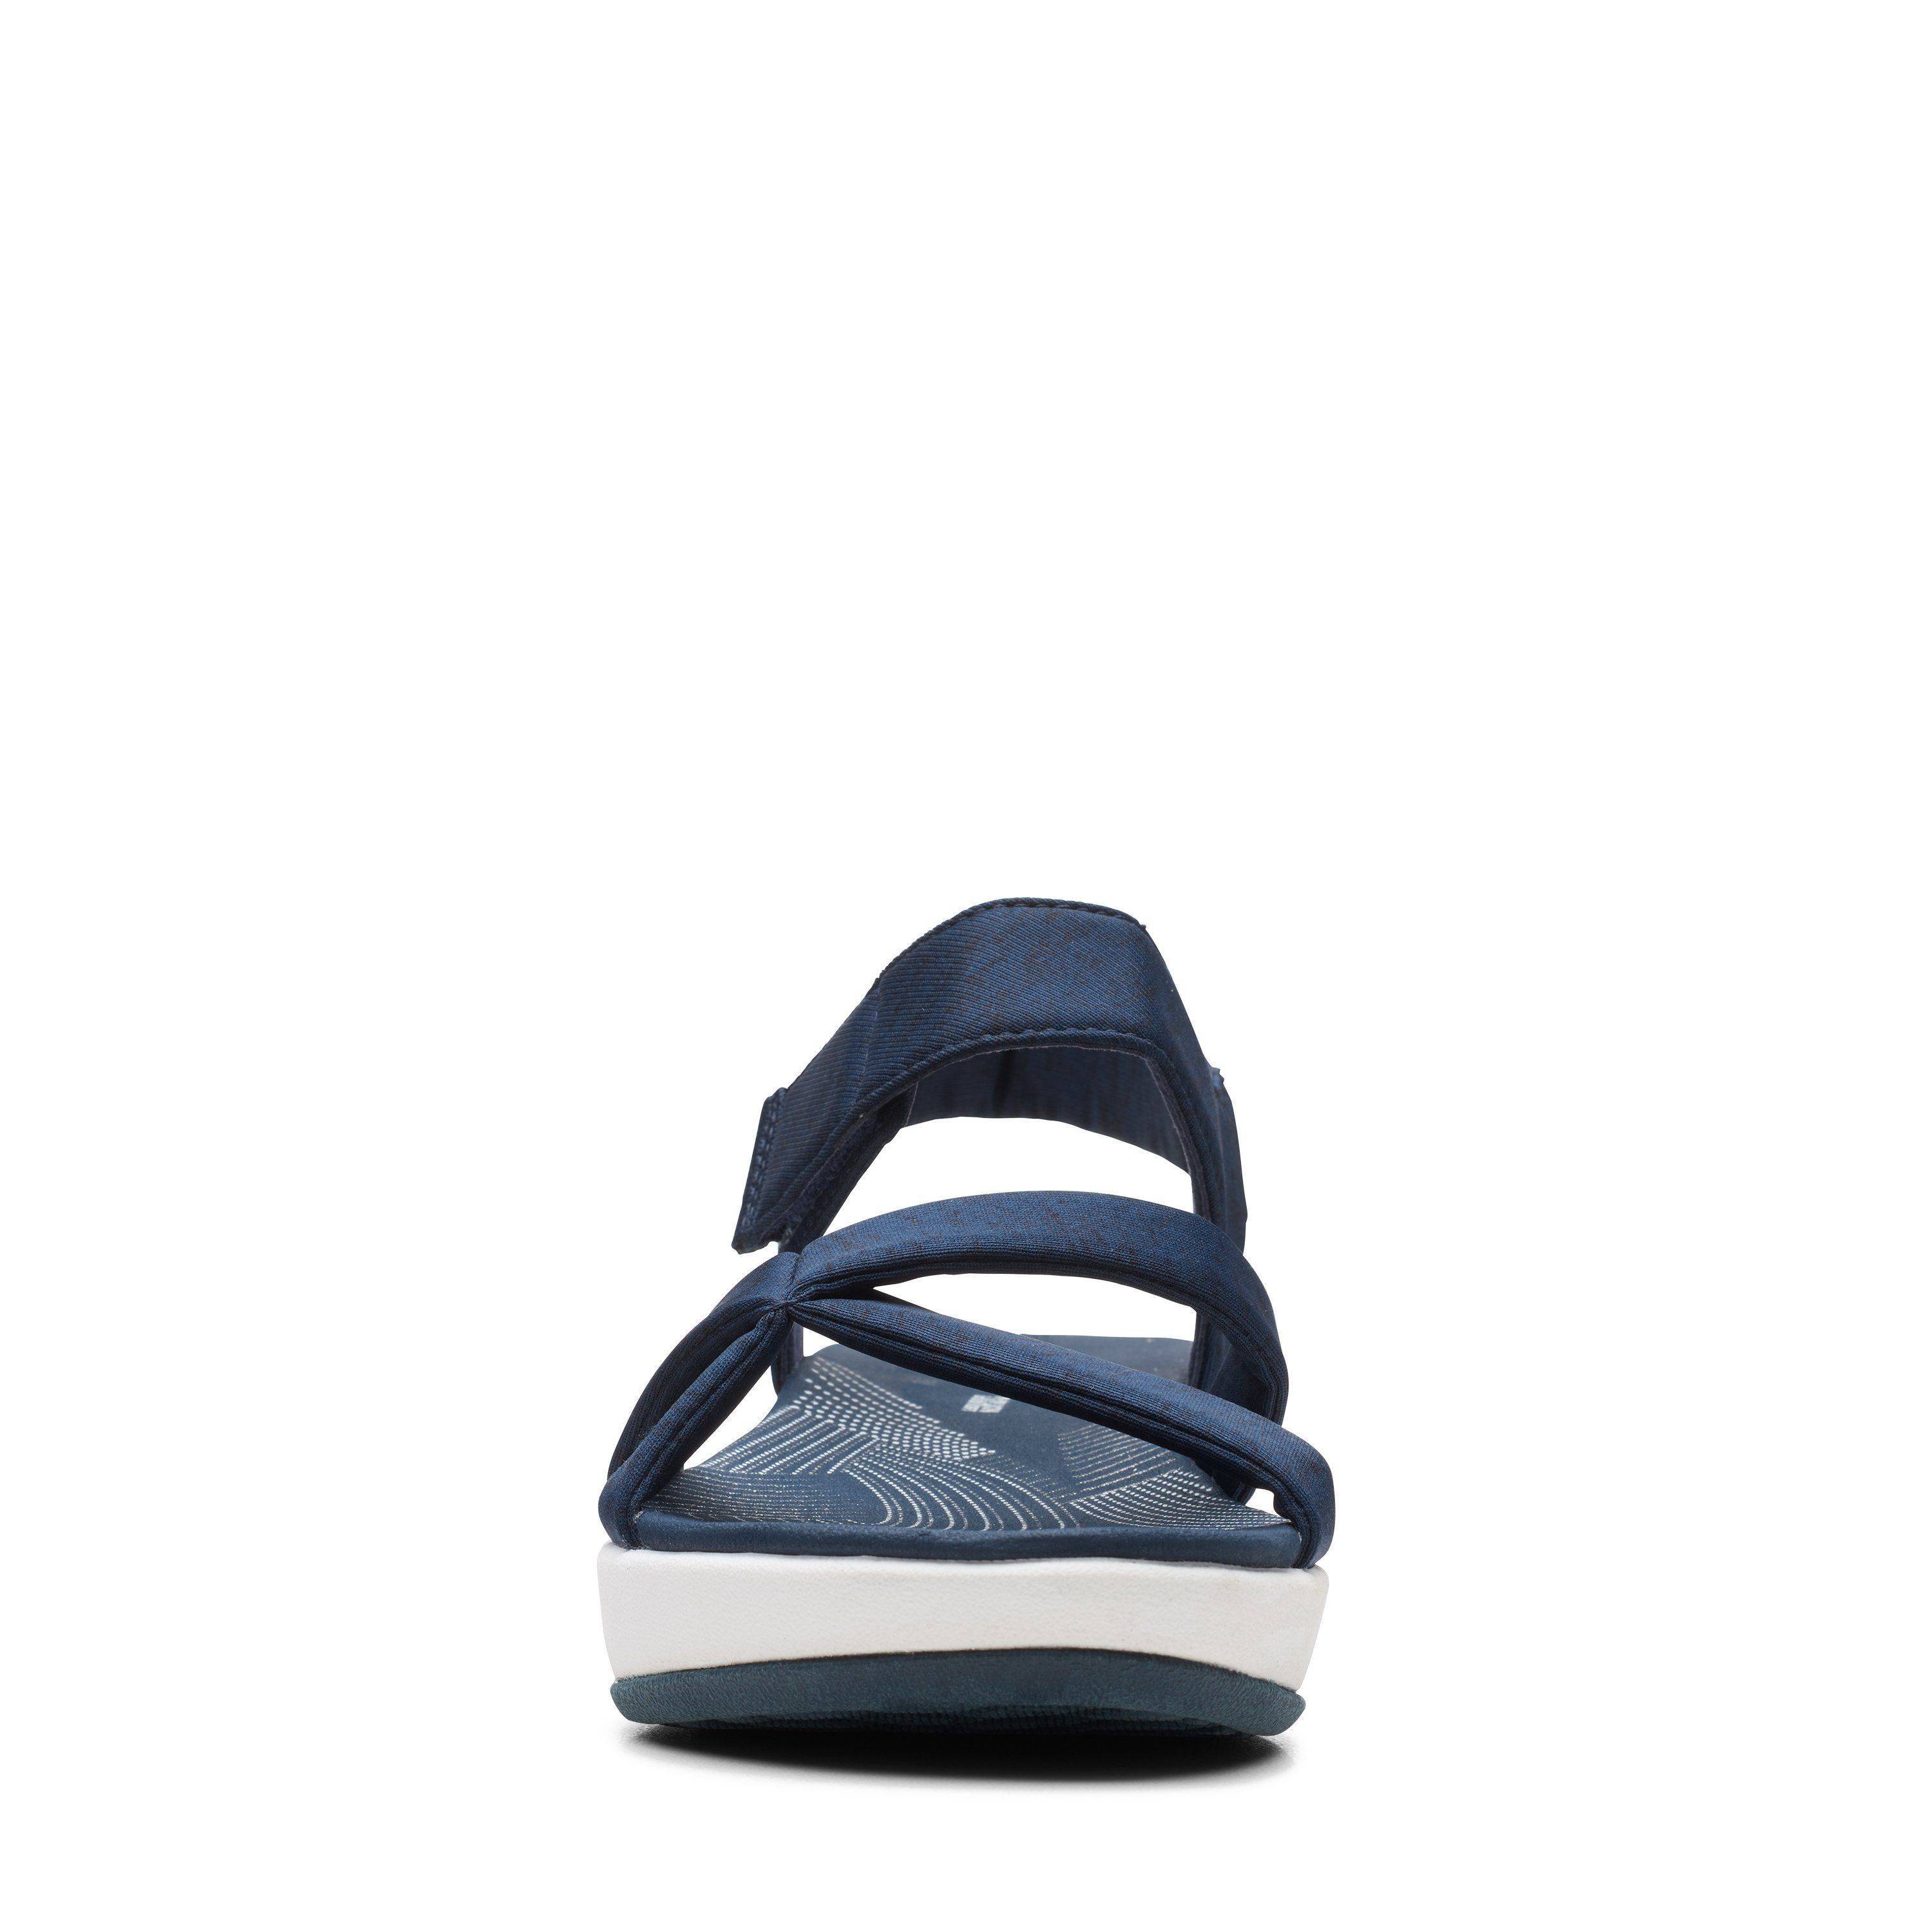 Женские сандалии Clarks, синие, цвет синий, размер 39.5 - фото 3